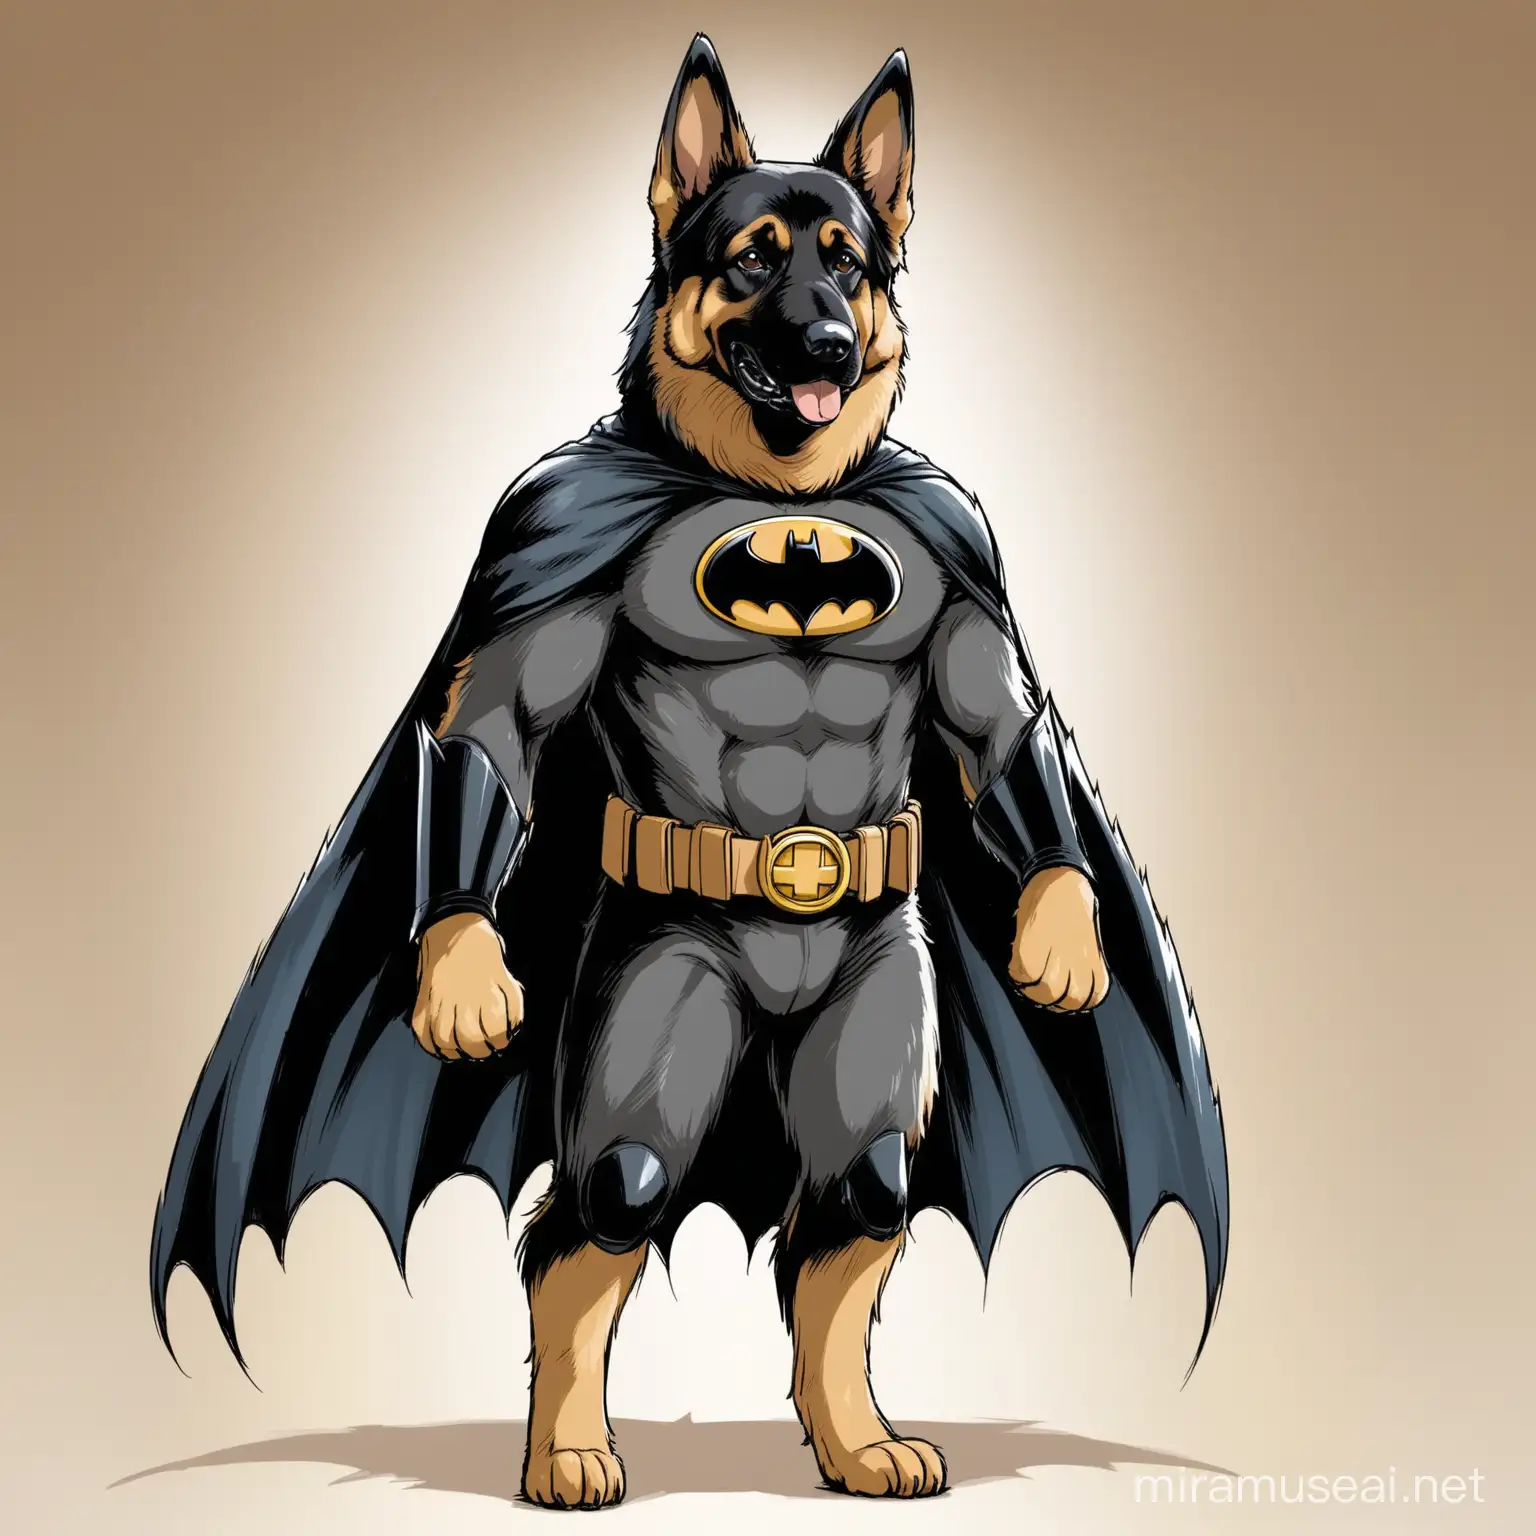 German shepherd dog batman, standing like human